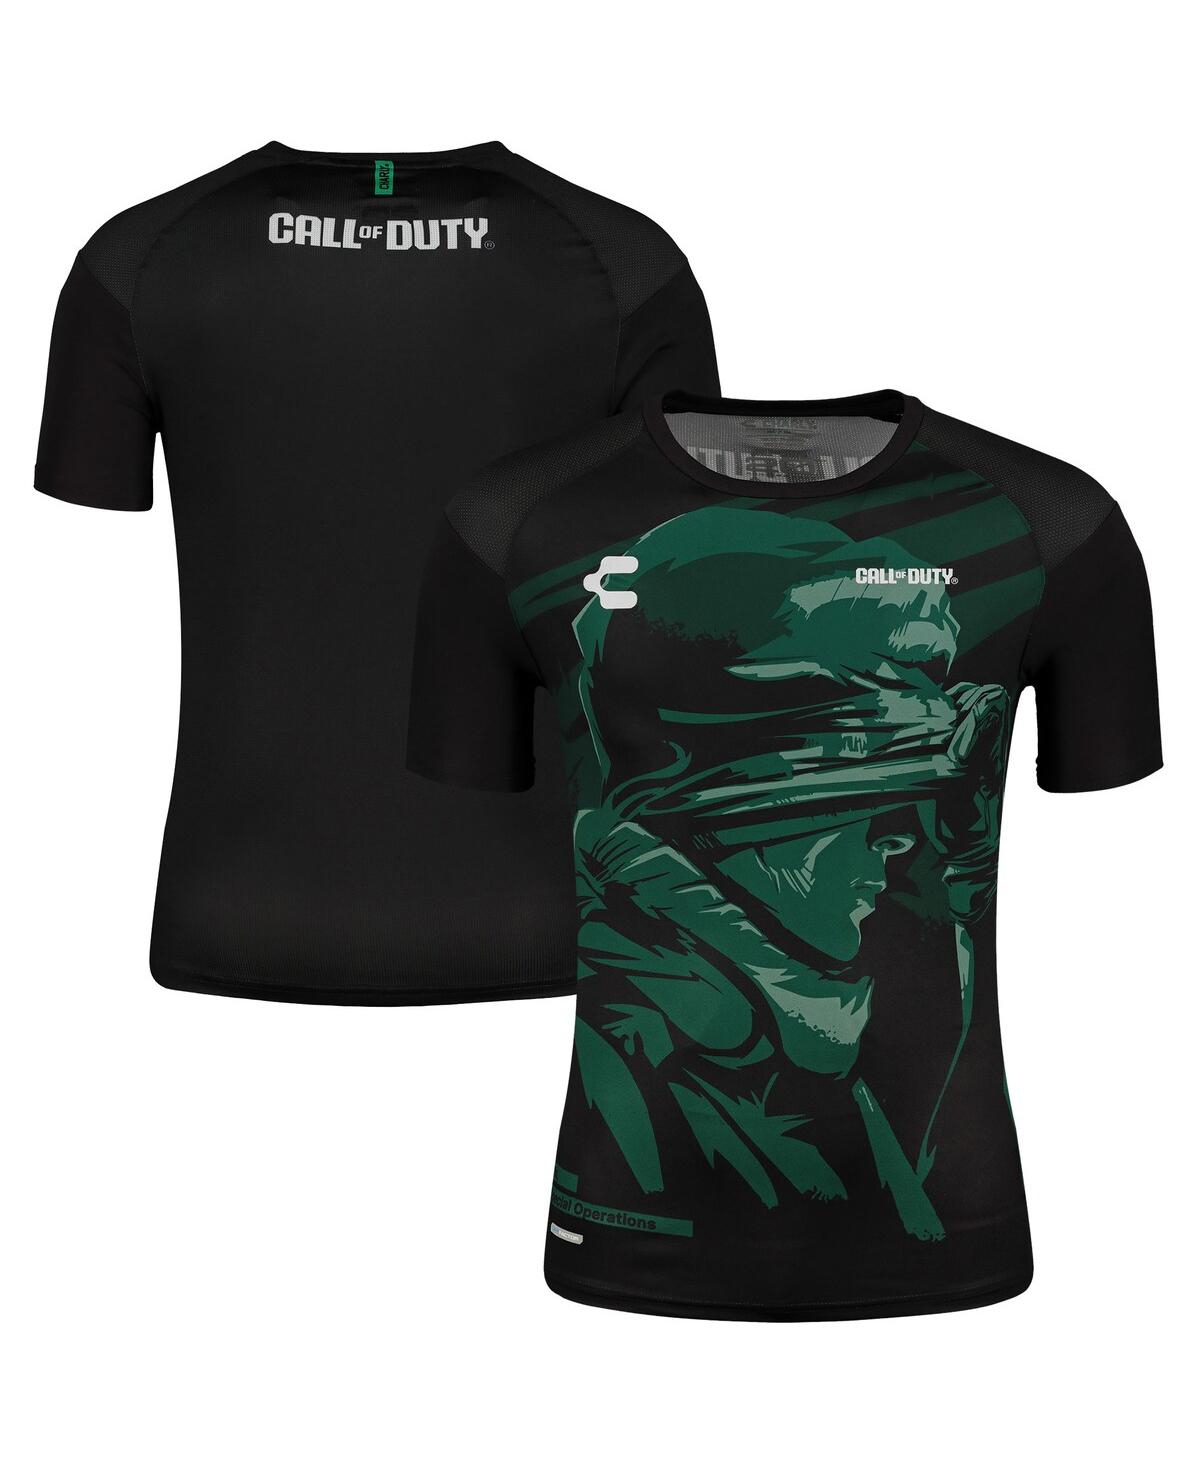 Men's Charly Black, Green Call of Duty Dry Factor Training T-shirt - Black, Green